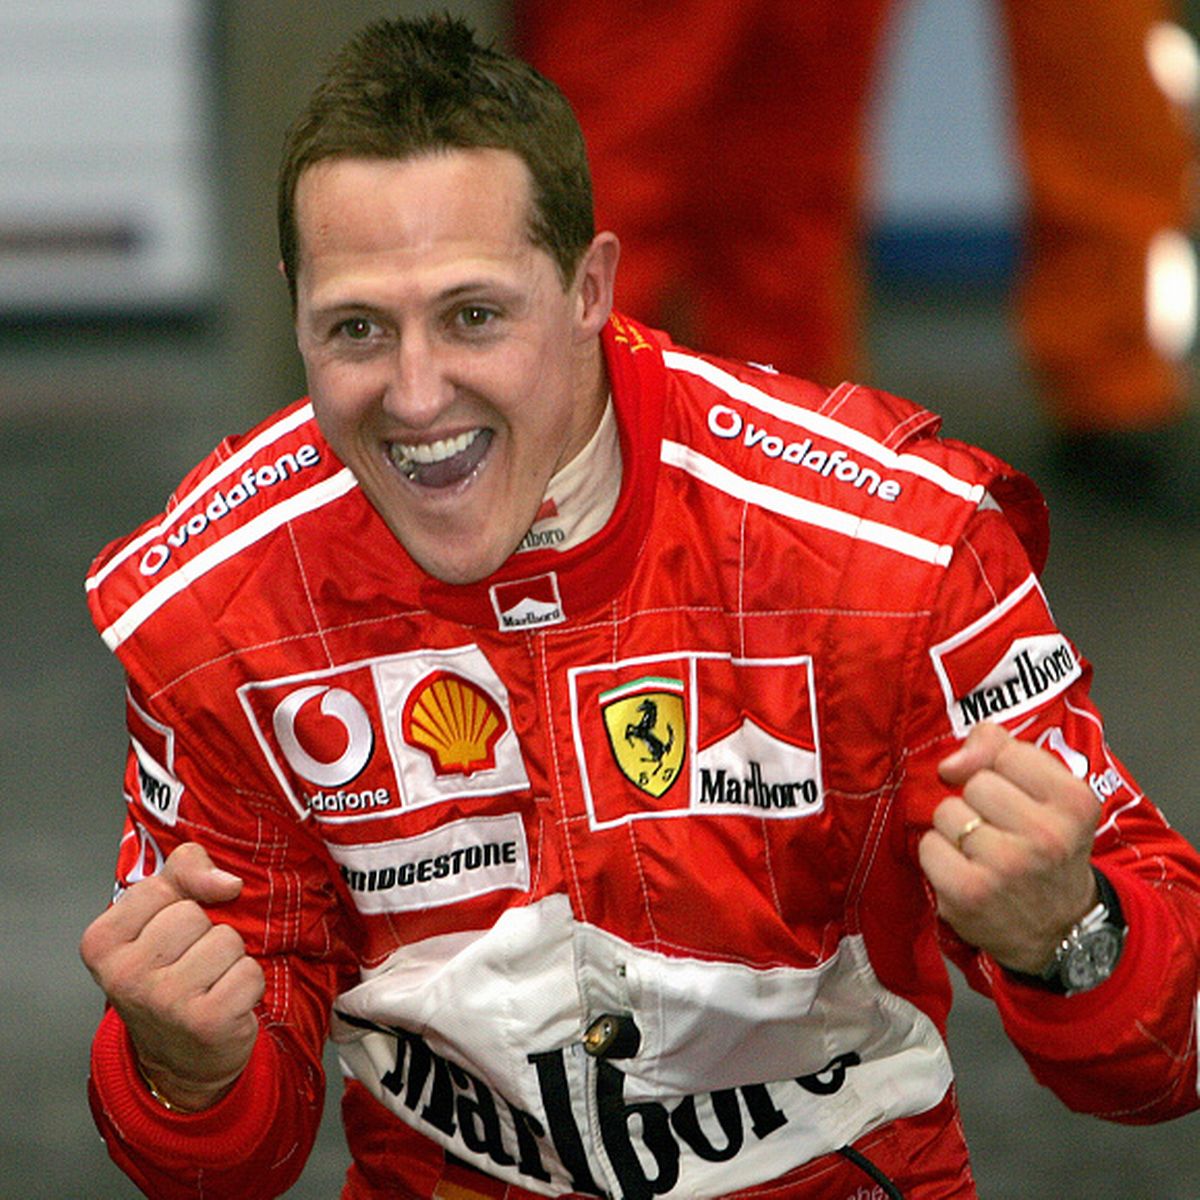 Michael Schumacher Net Worth $600 Million - The Red Baron